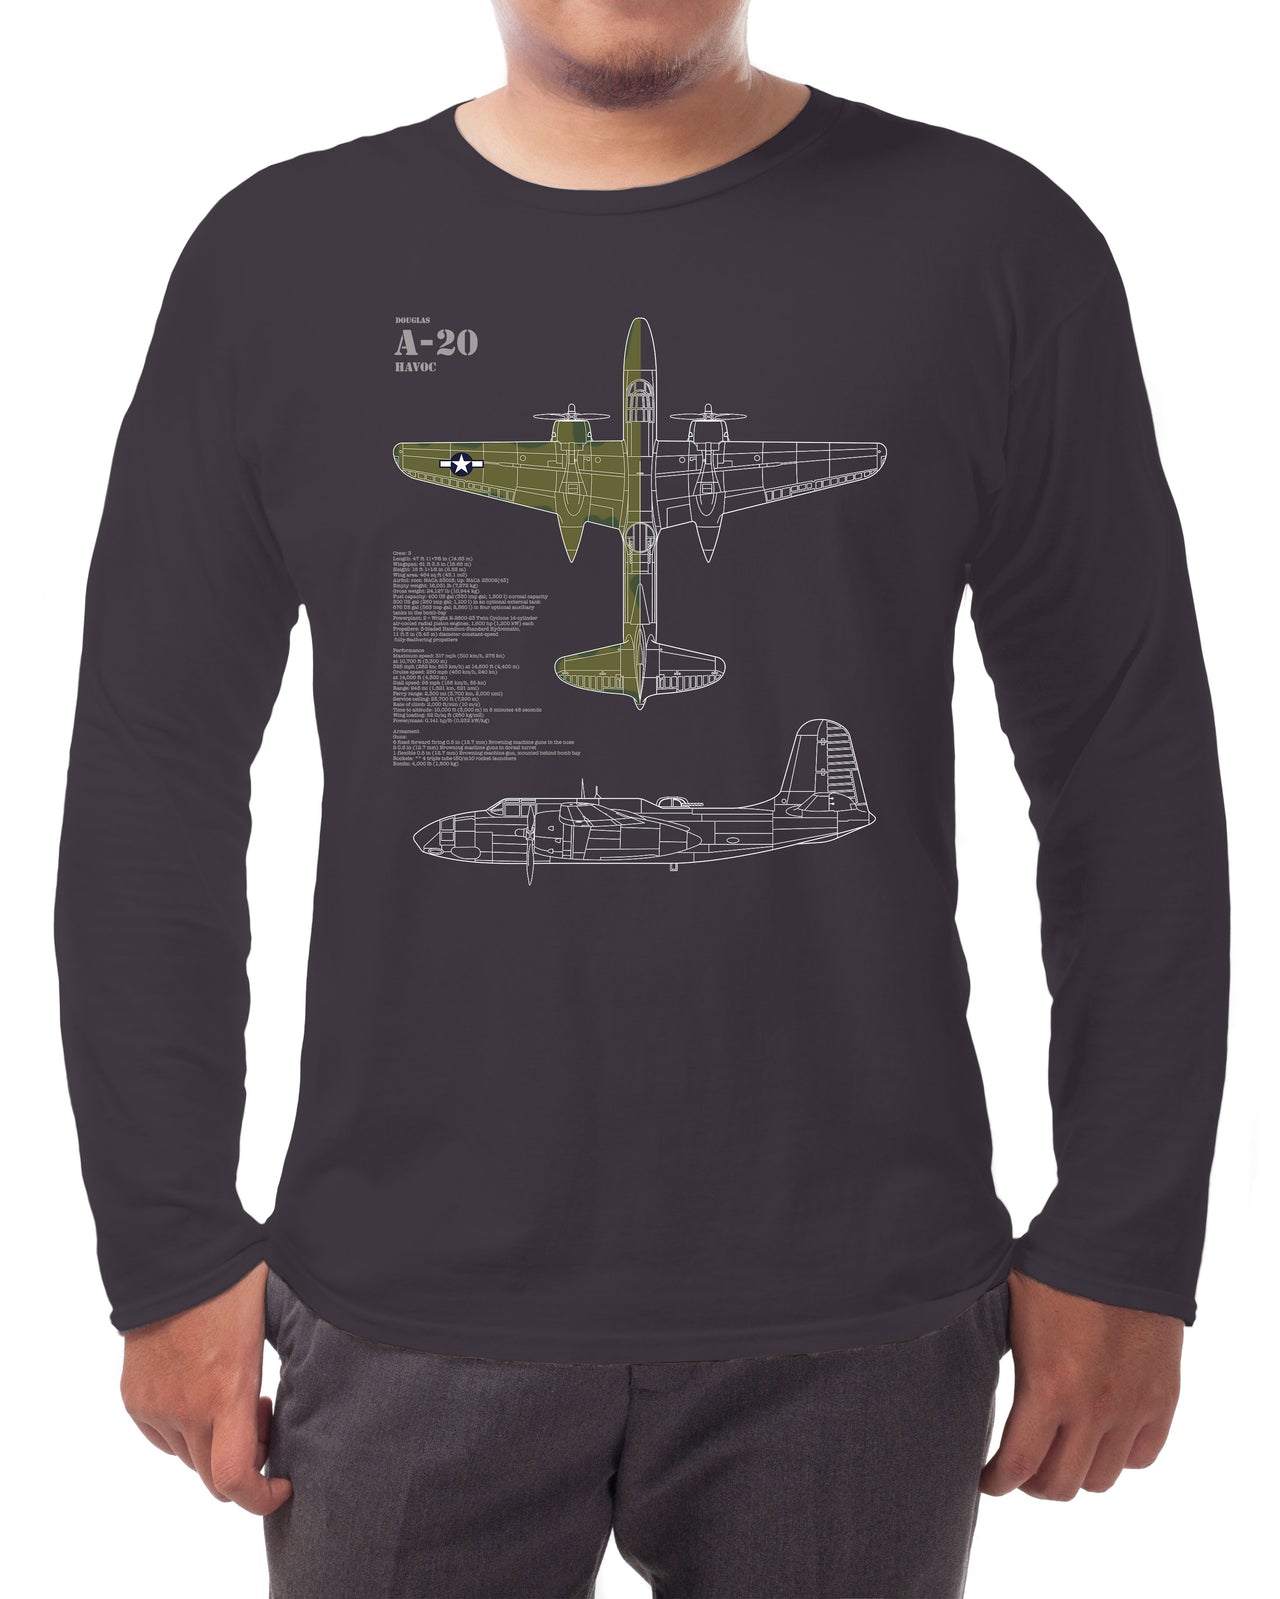 A-20 Havoc - Long-sleeve T-shirt